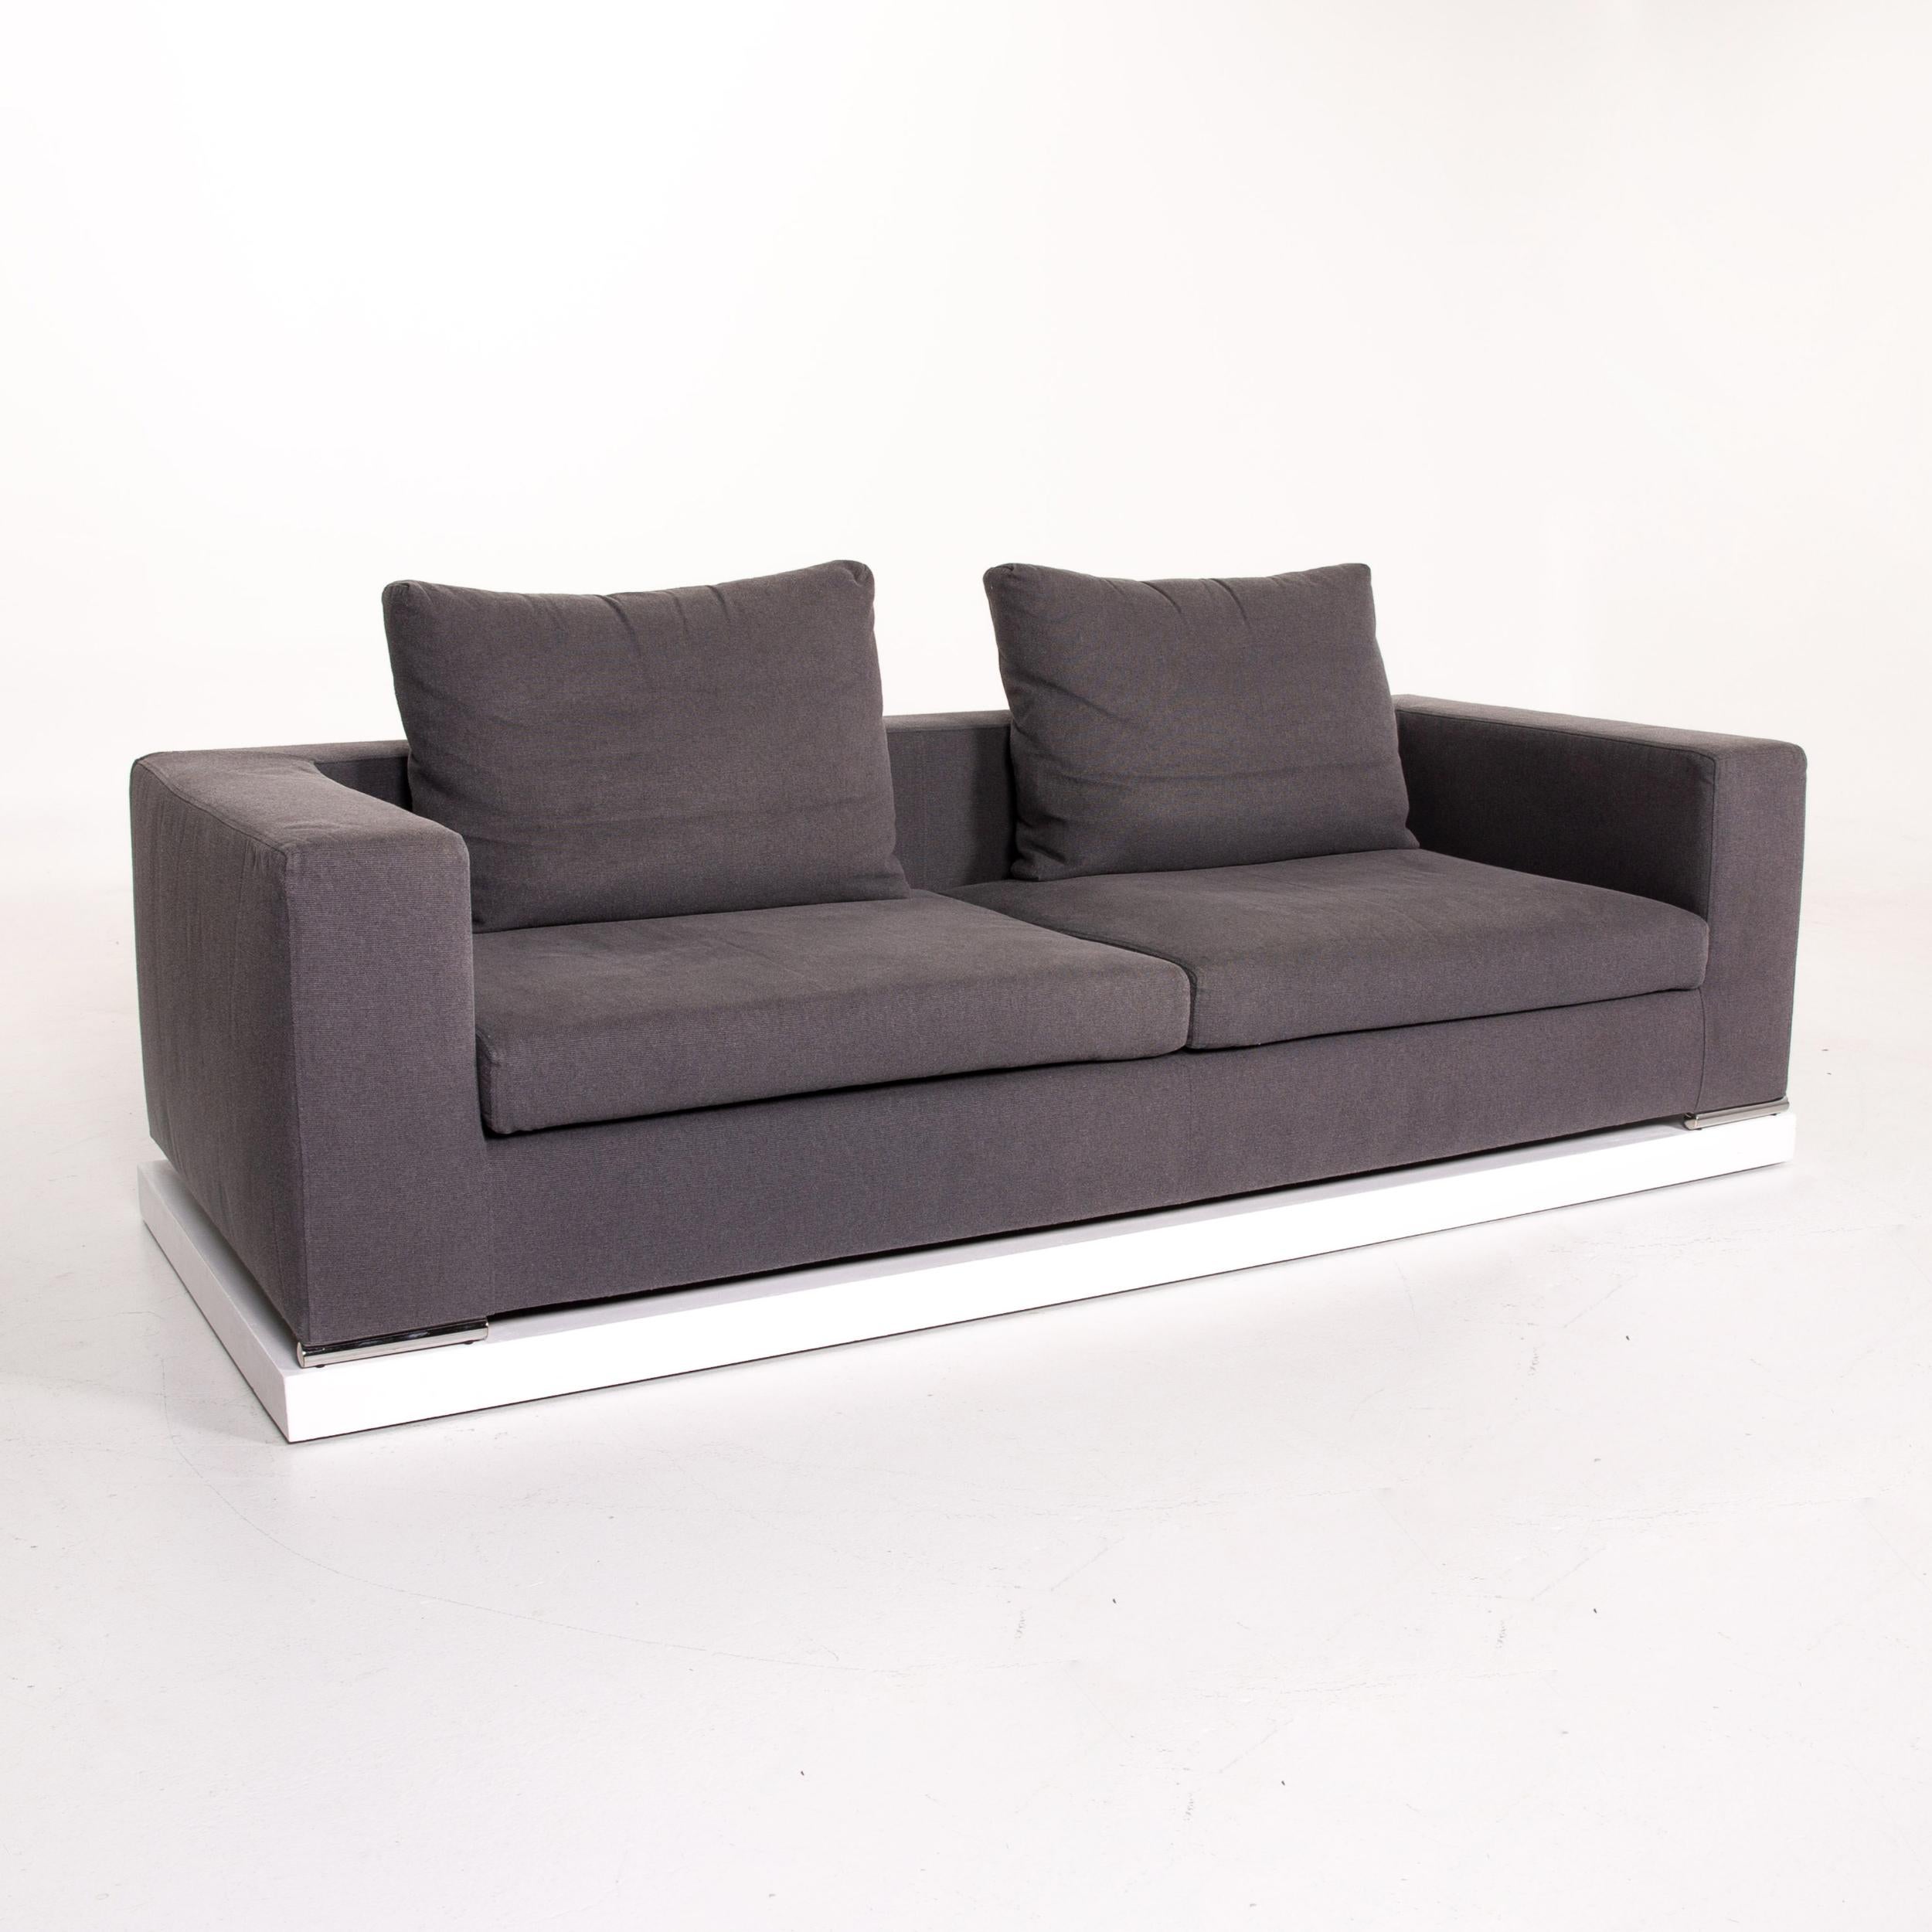 Saba Italia Fabric Sofa Gray Two-Seat Couch In Good Condition For Sale In Cologne, DE